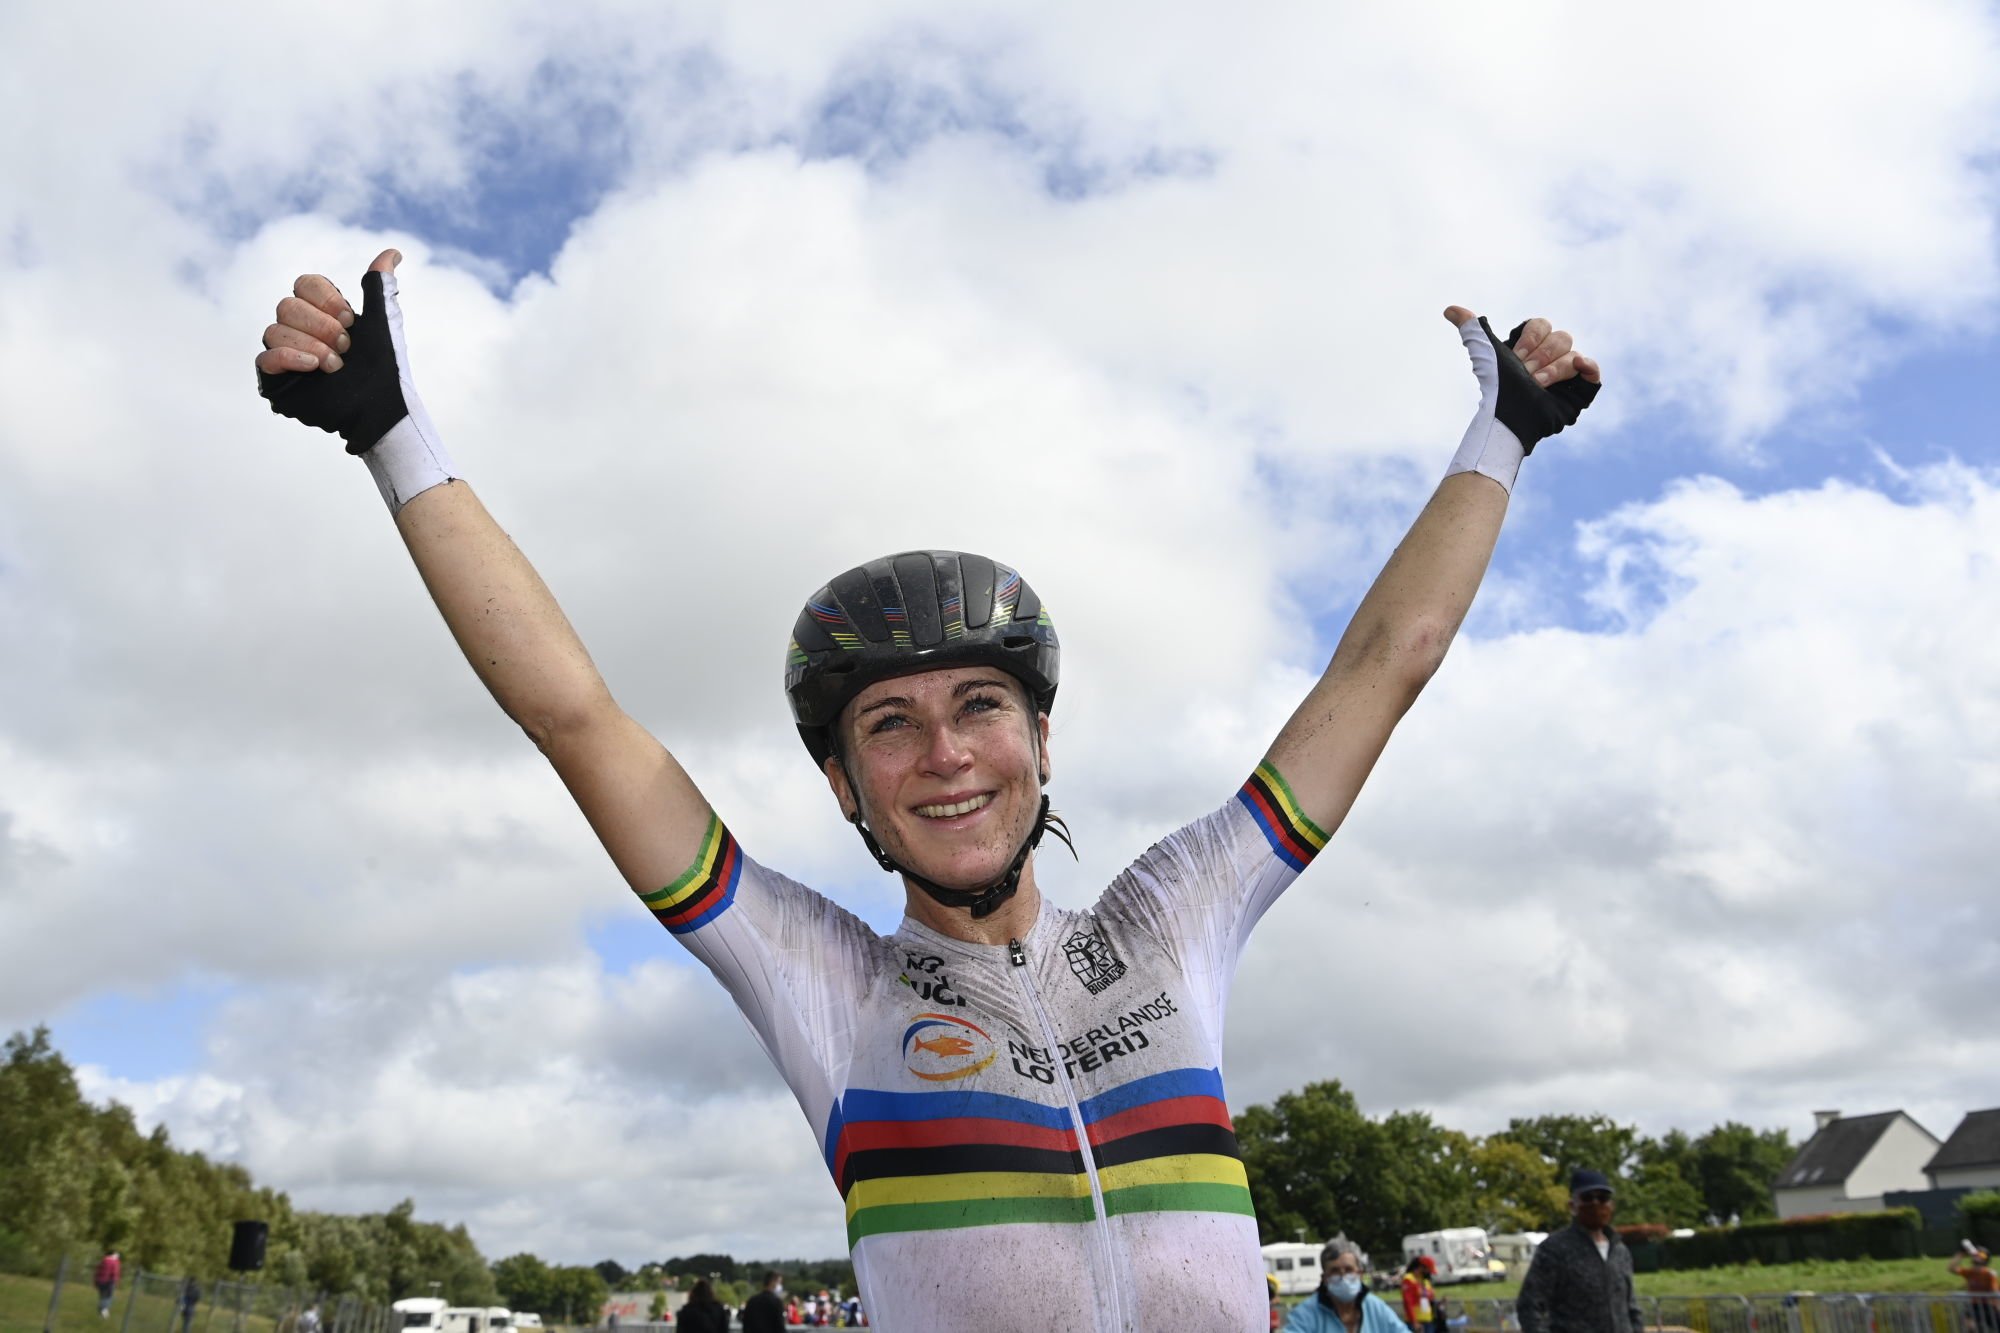 Dutch Annemiek van Vleuten celebrates after winning the women's elite road race at the European Championships cycling in Plouay, France, Thursday 27 August 2020.
BELGA PHOTO ERIC LALMAND 
By Icon Sport